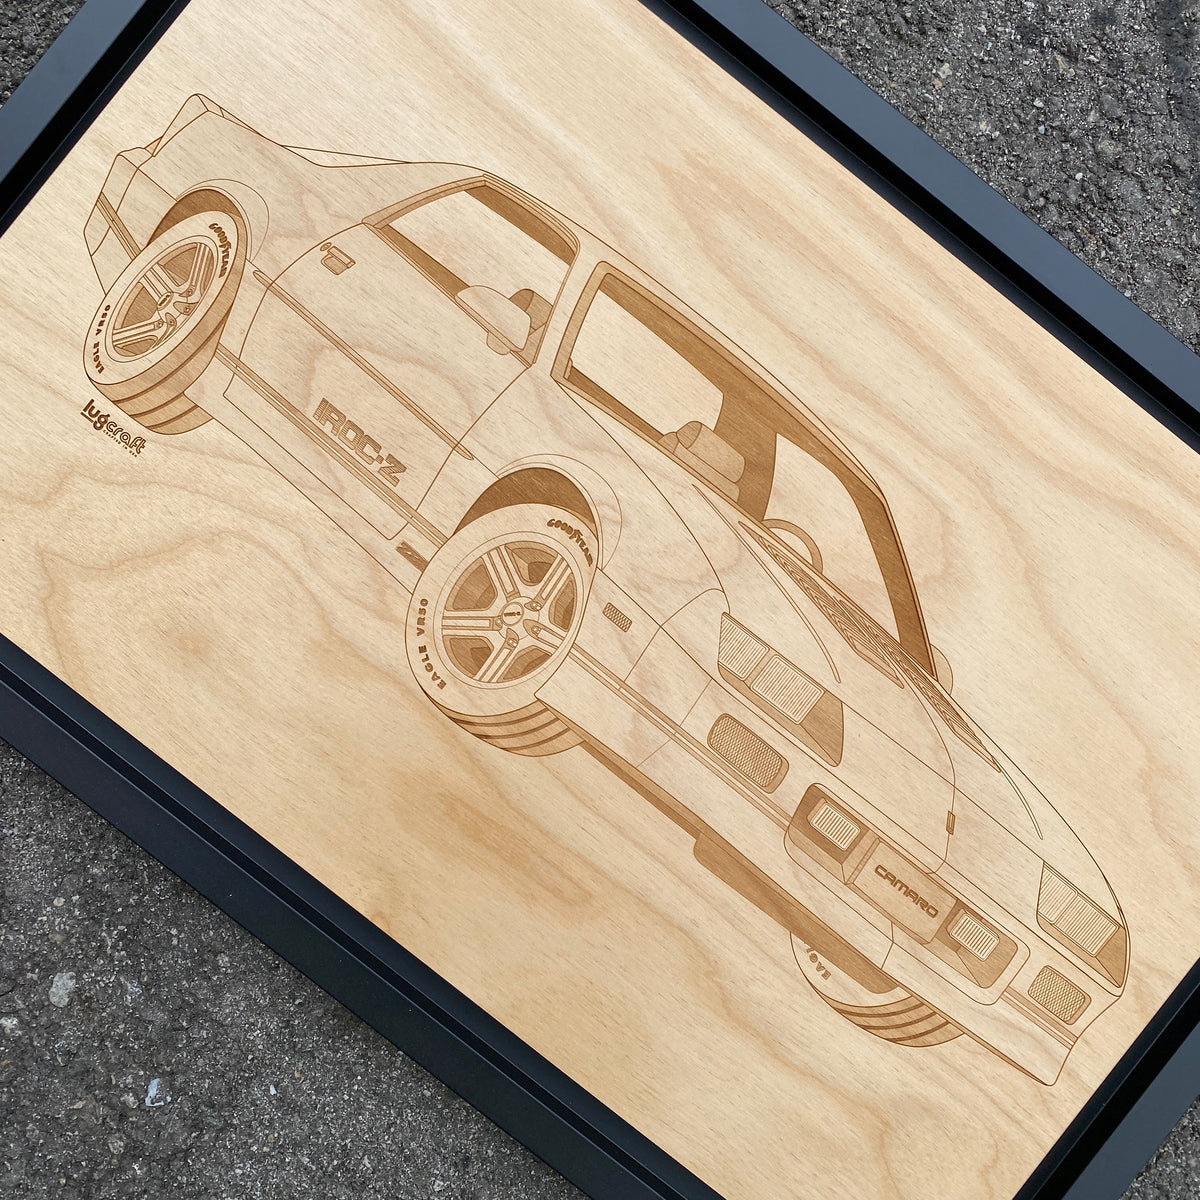 Chevy IROC-Z Camaro Framed Wood Engraved Artwork